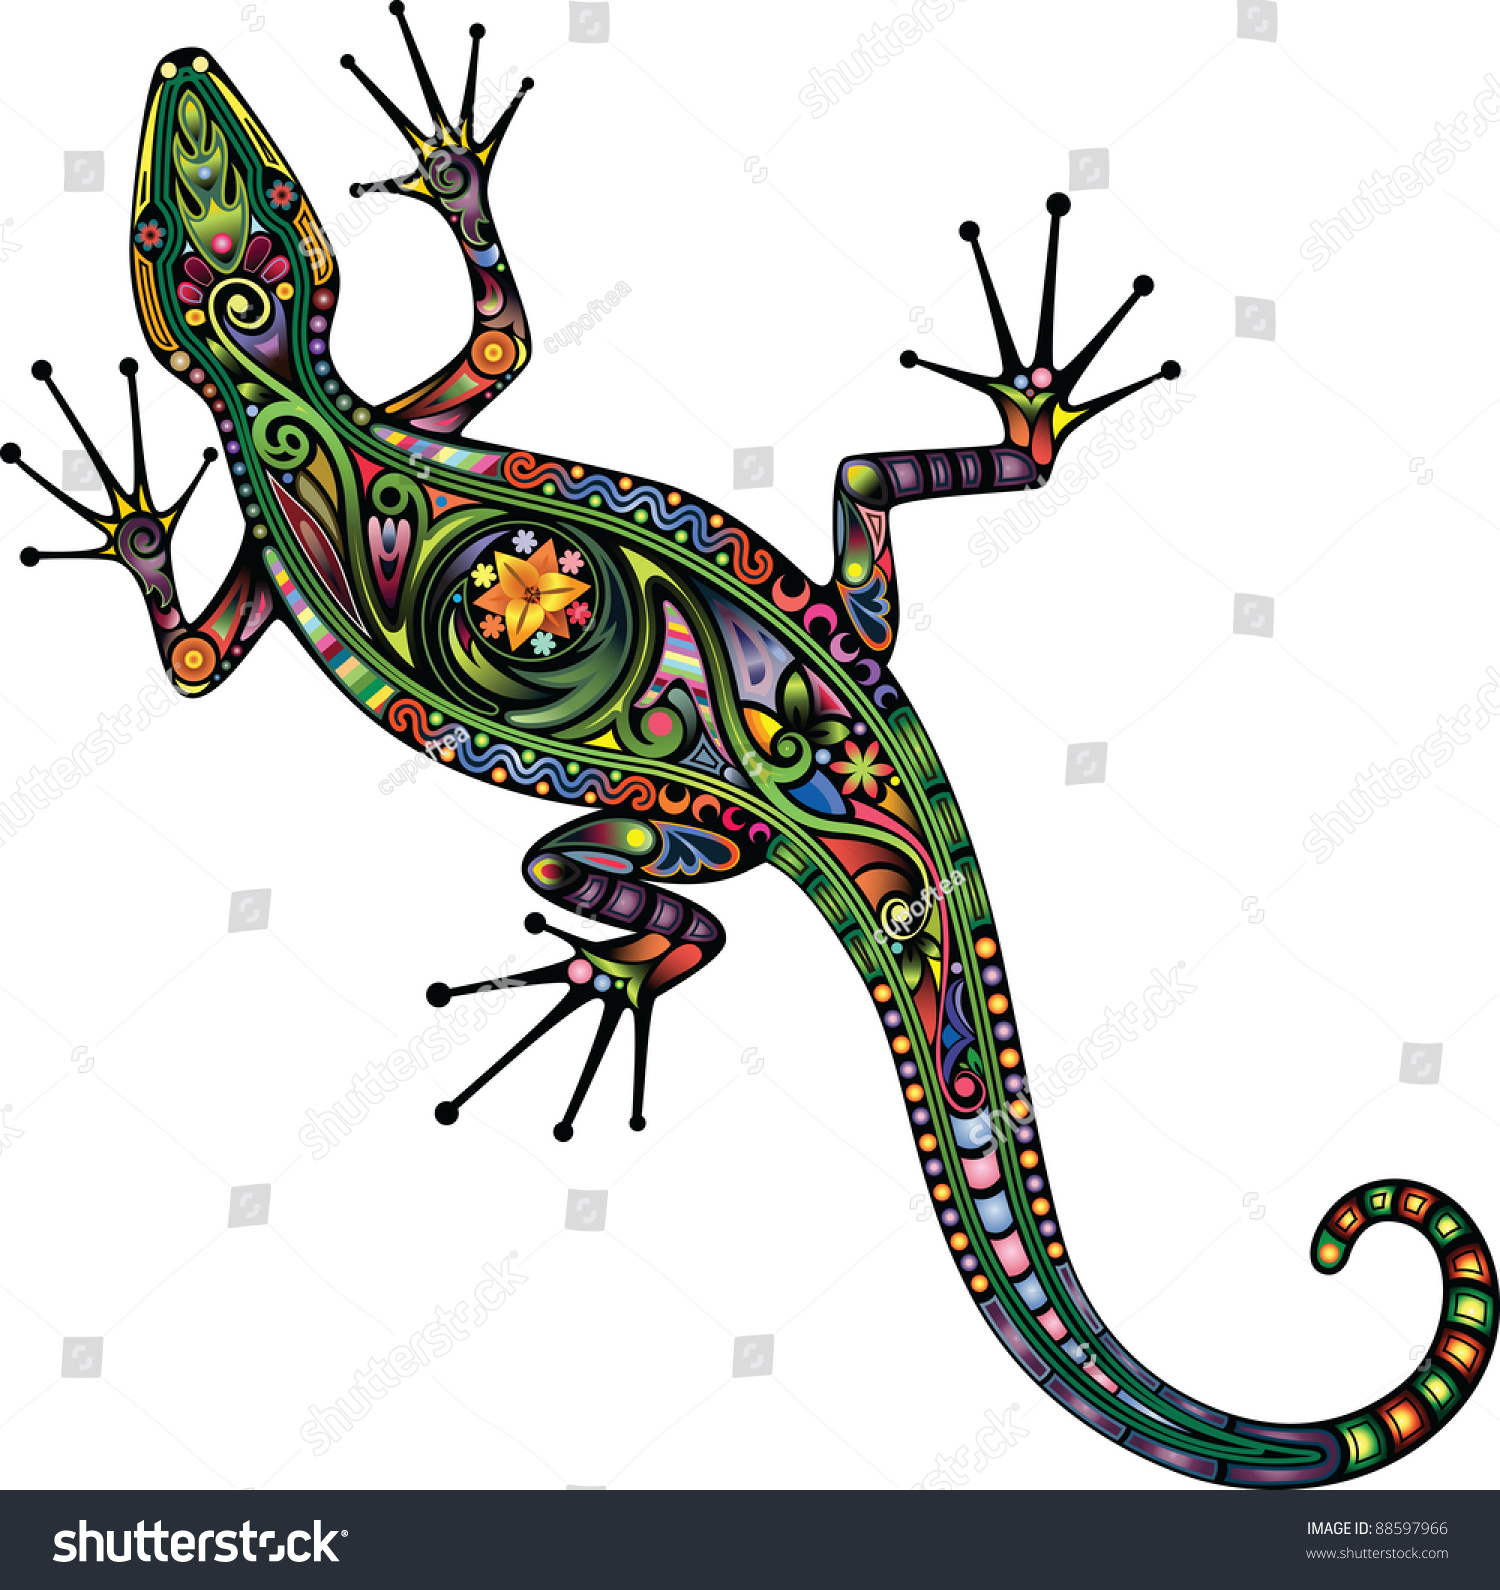 Lizard Stock Vector 88597966 - Shutterstock